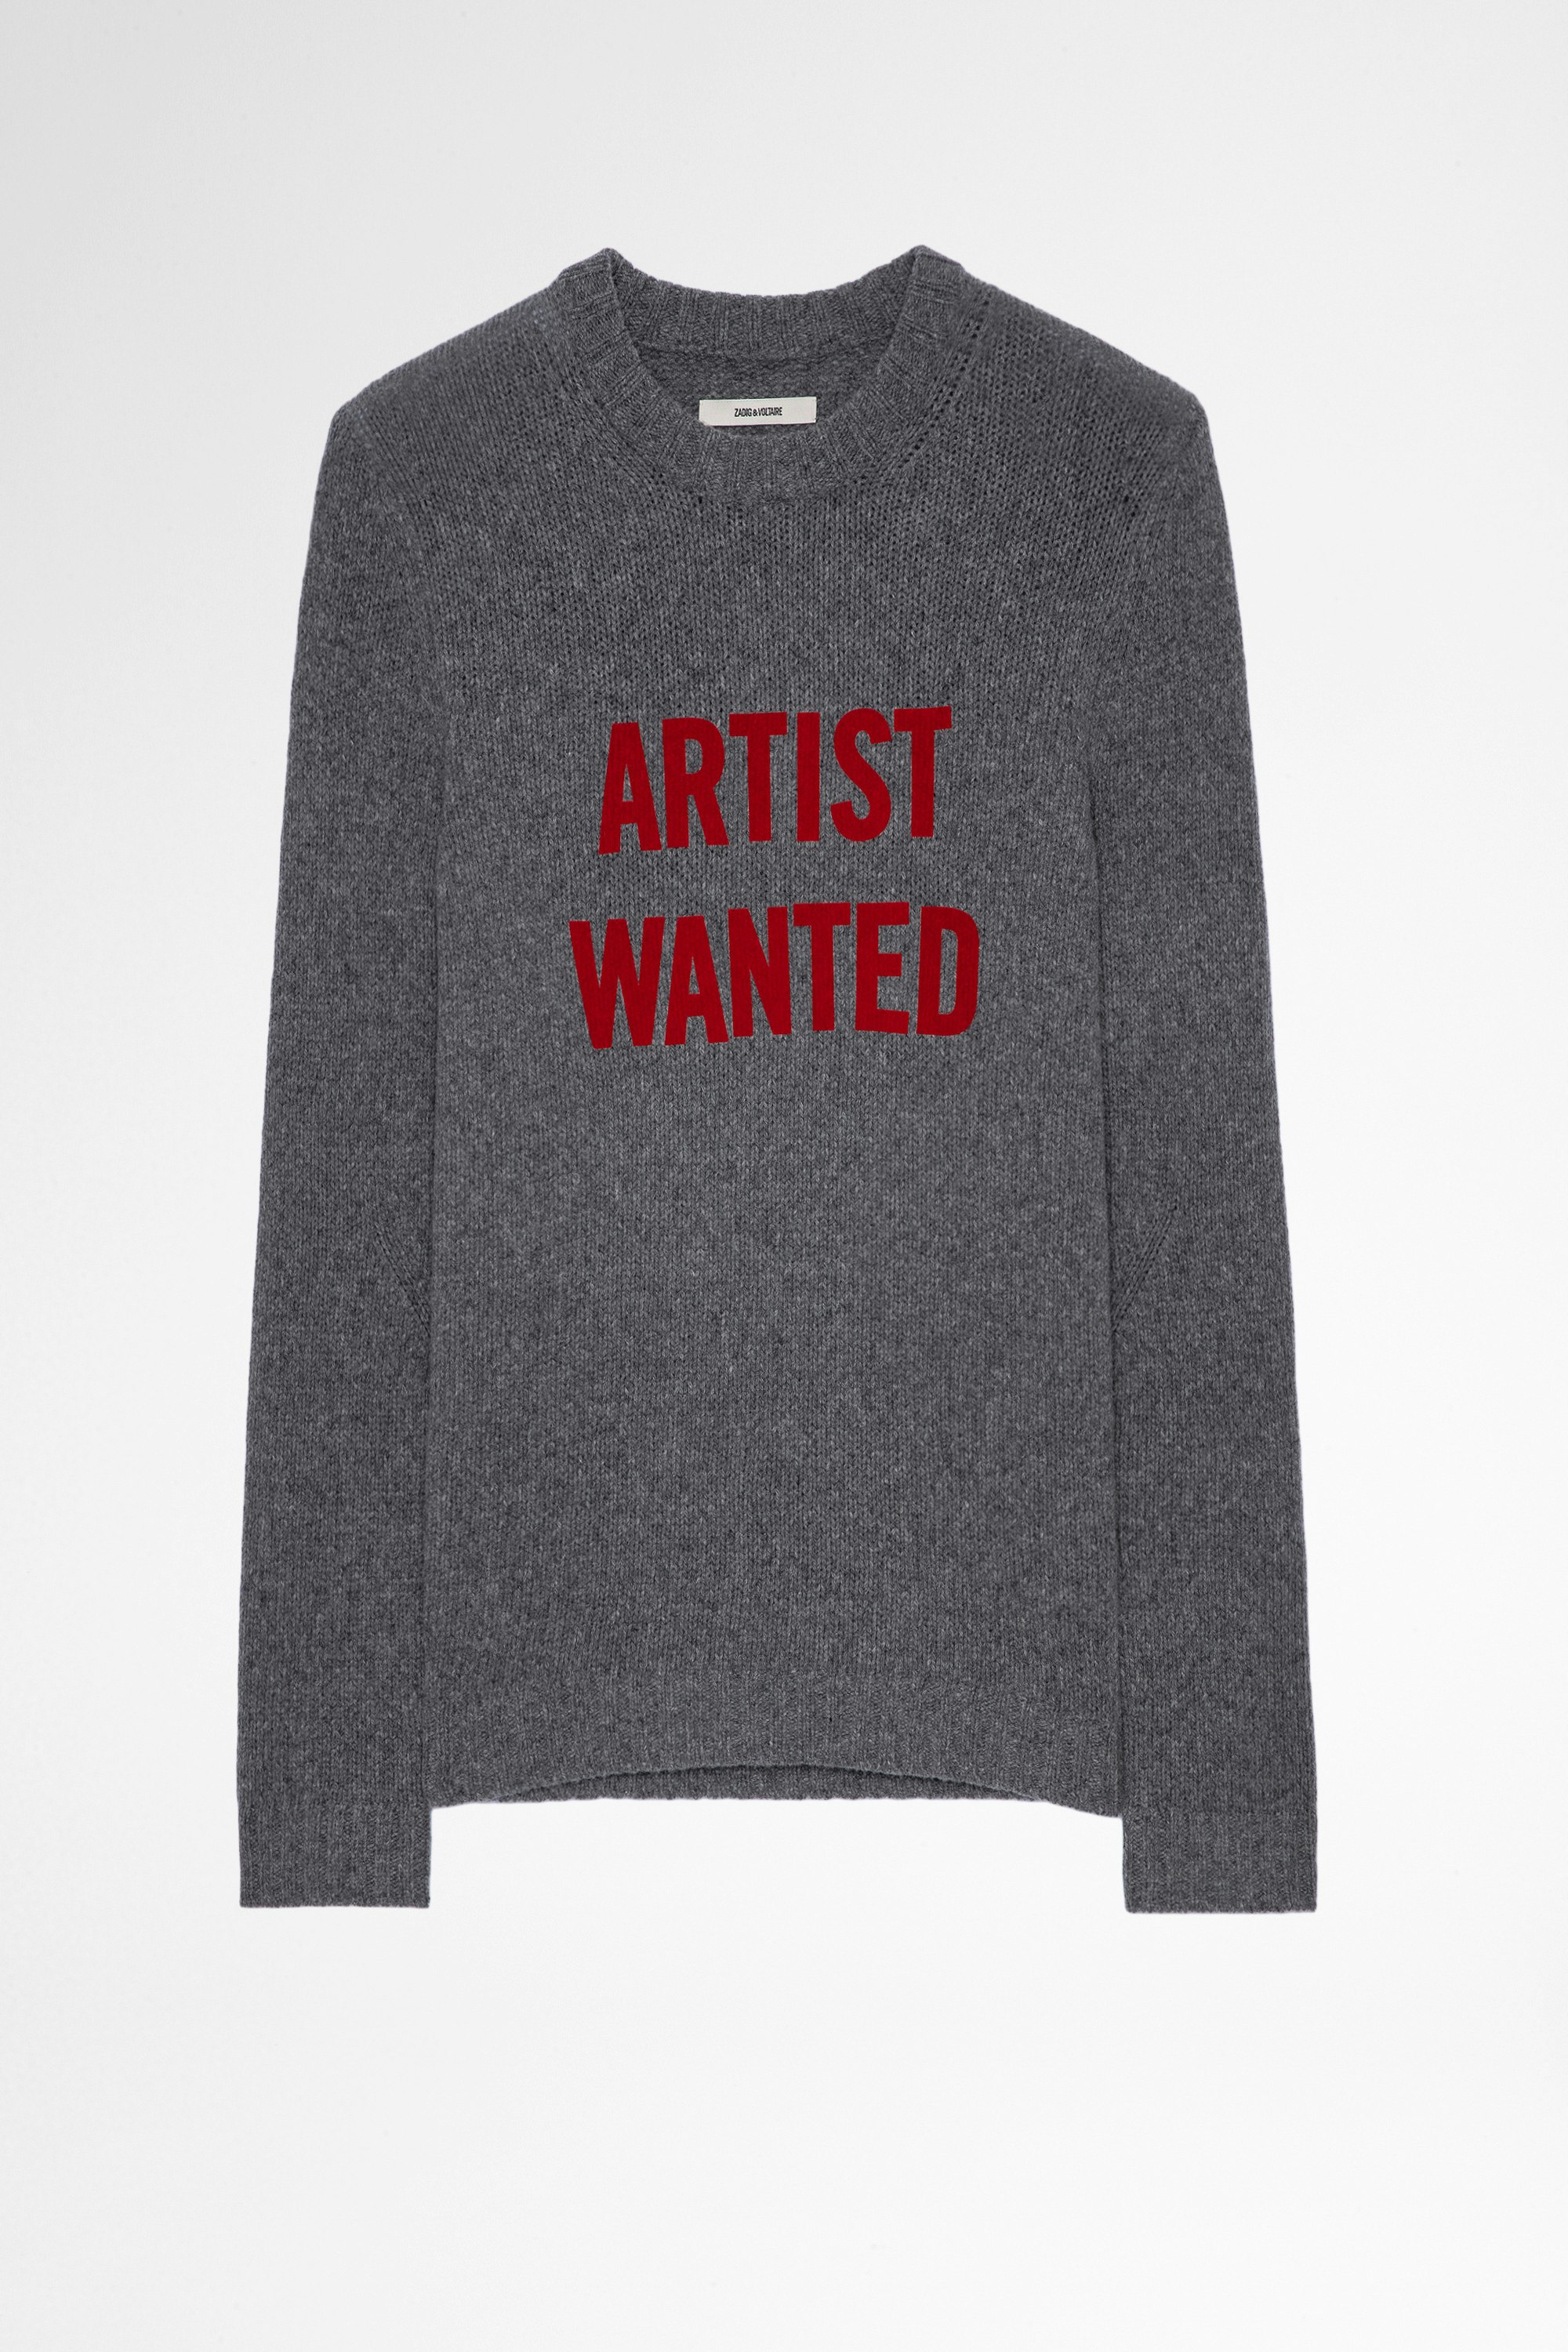 Kennedy Artist Wanted Sweater Men's Artist Wanted gray merino sweater